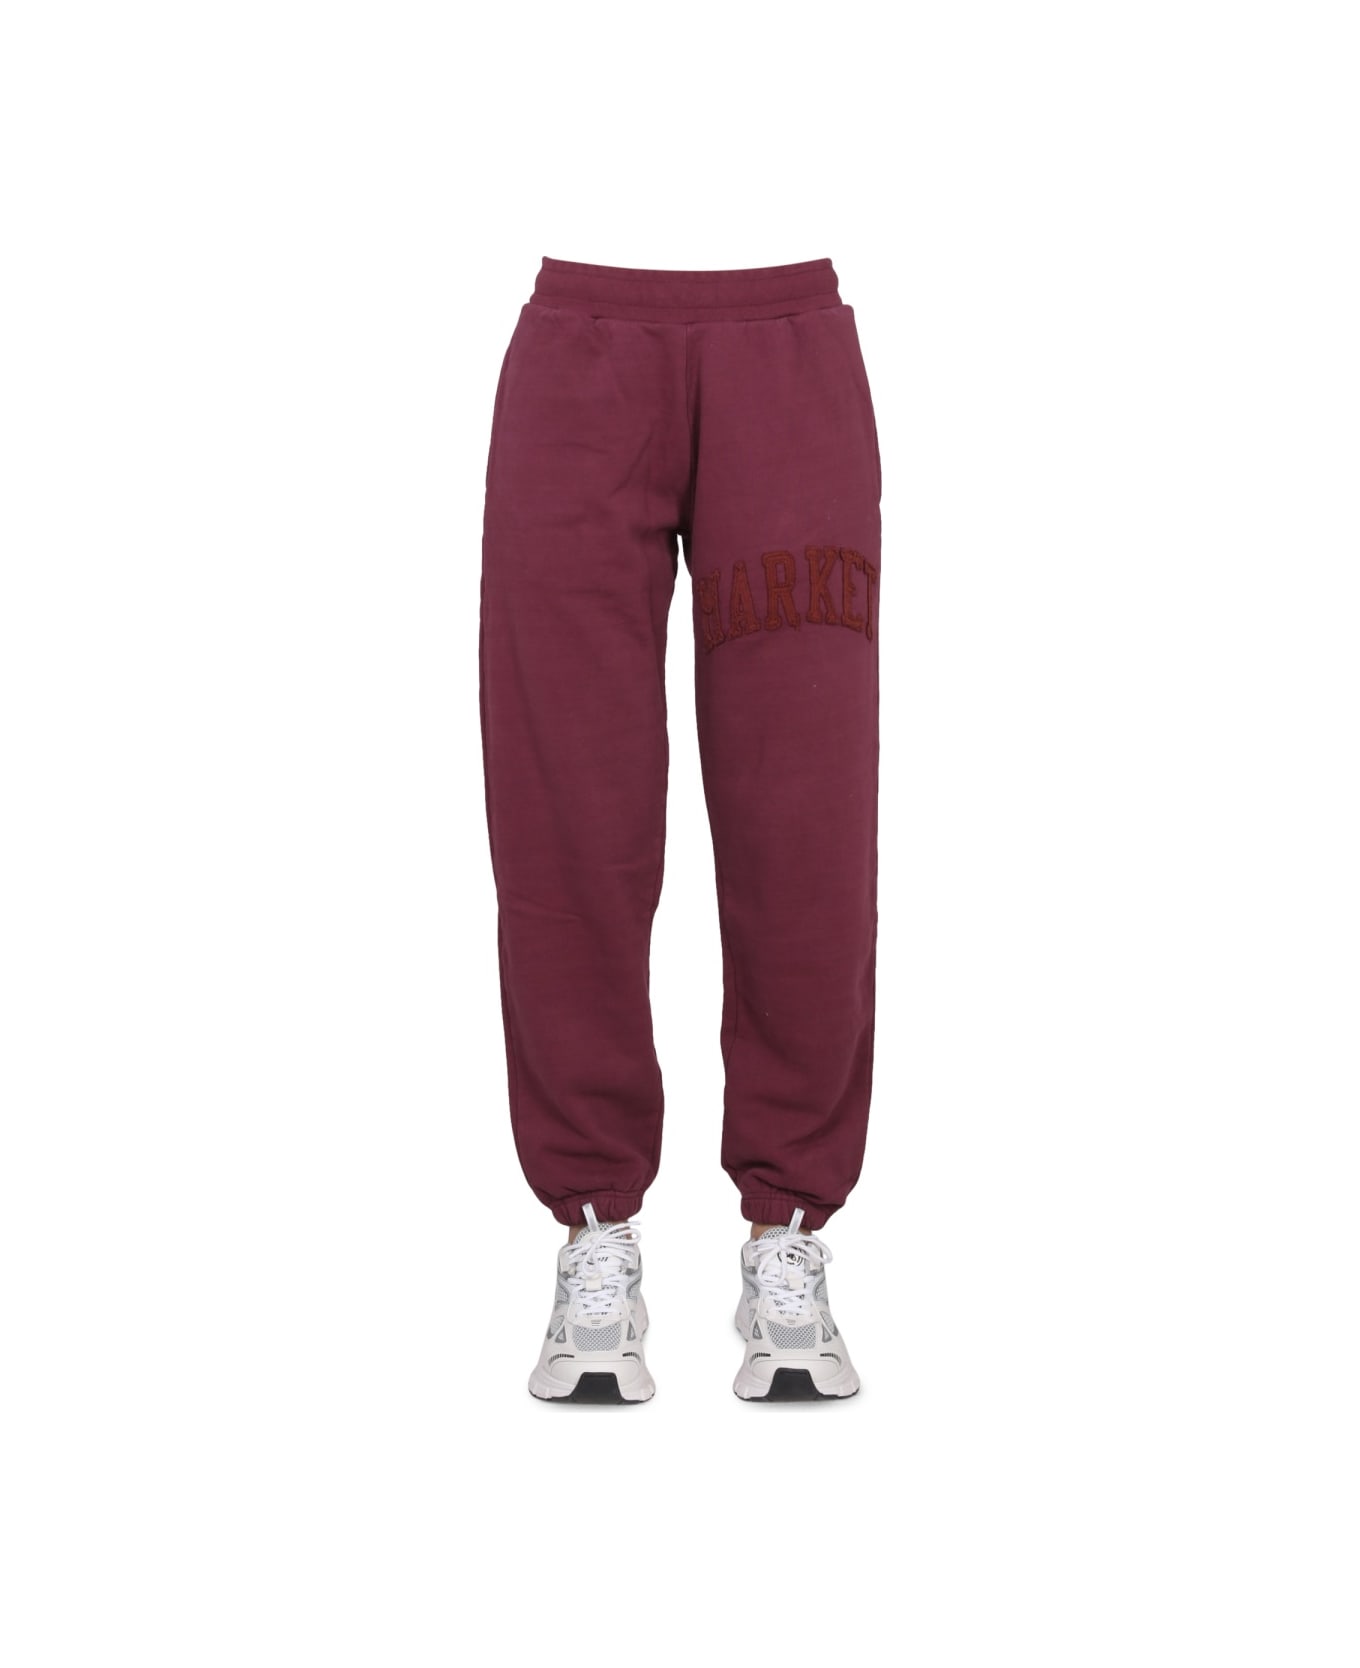 Market Pants With Applied Logo - BORDEAUX name:467